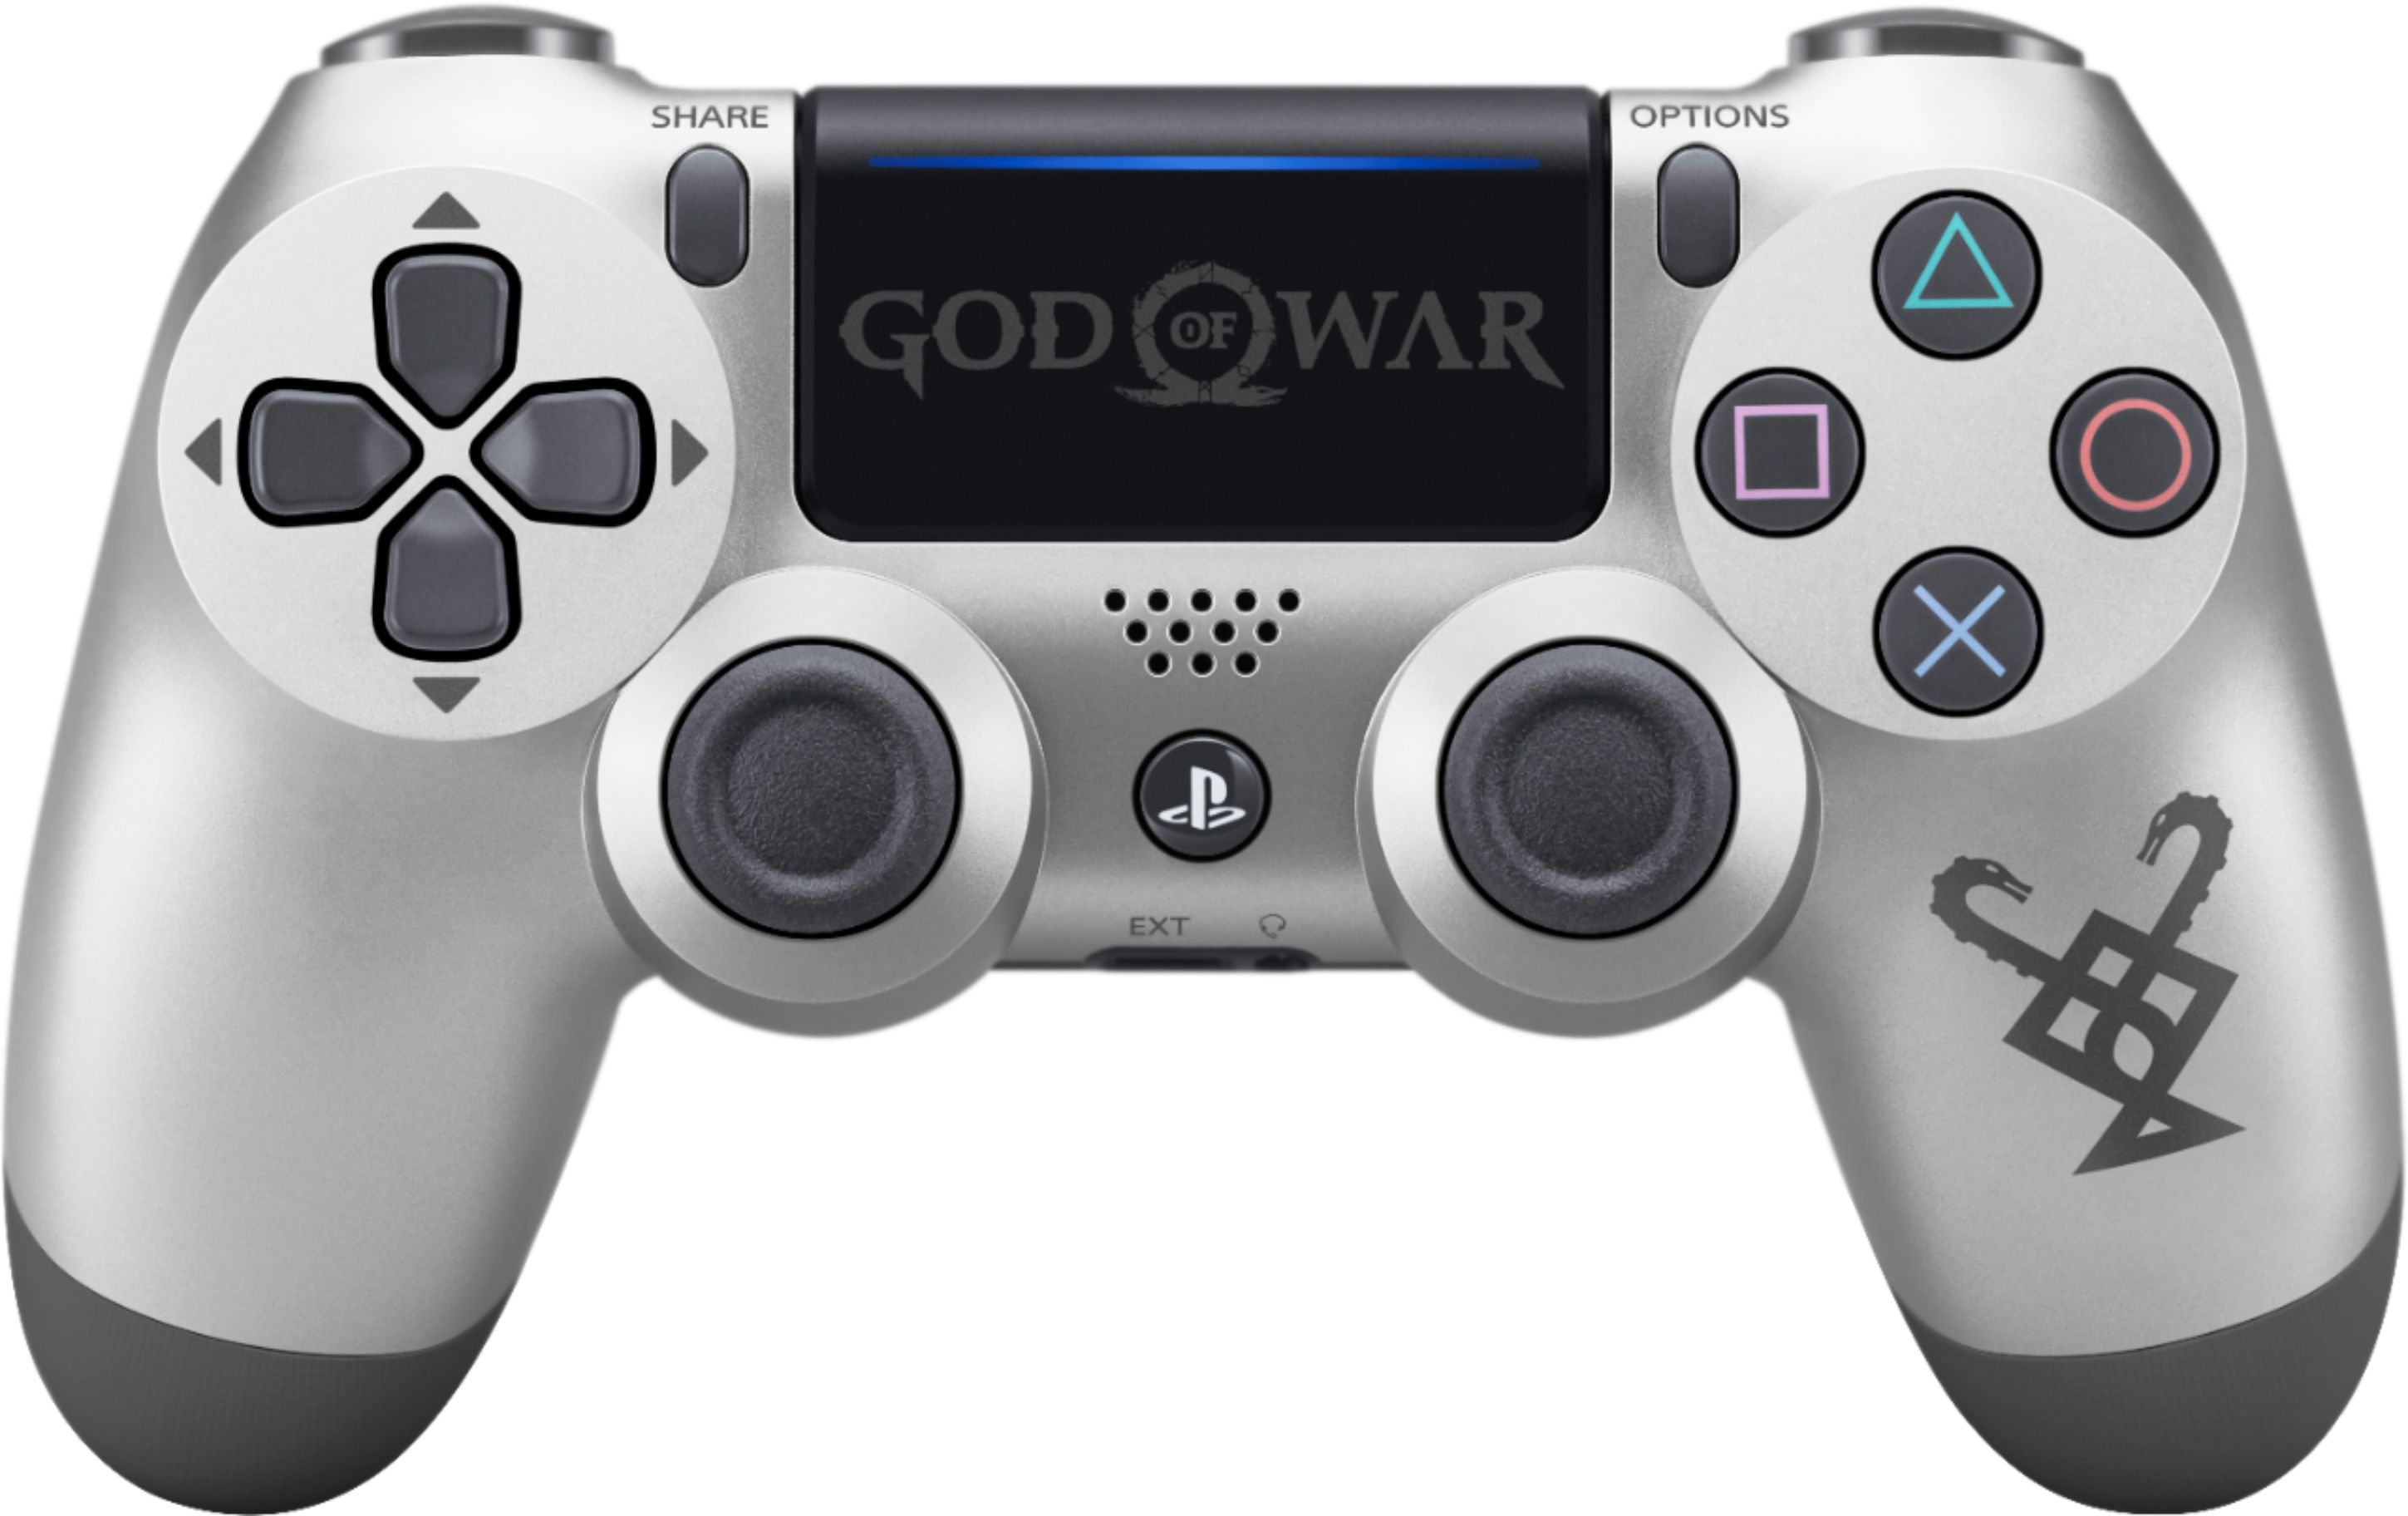 God of War PlayStation Hits Standard Edition PlayStation 4 3001886 - Best  Buy